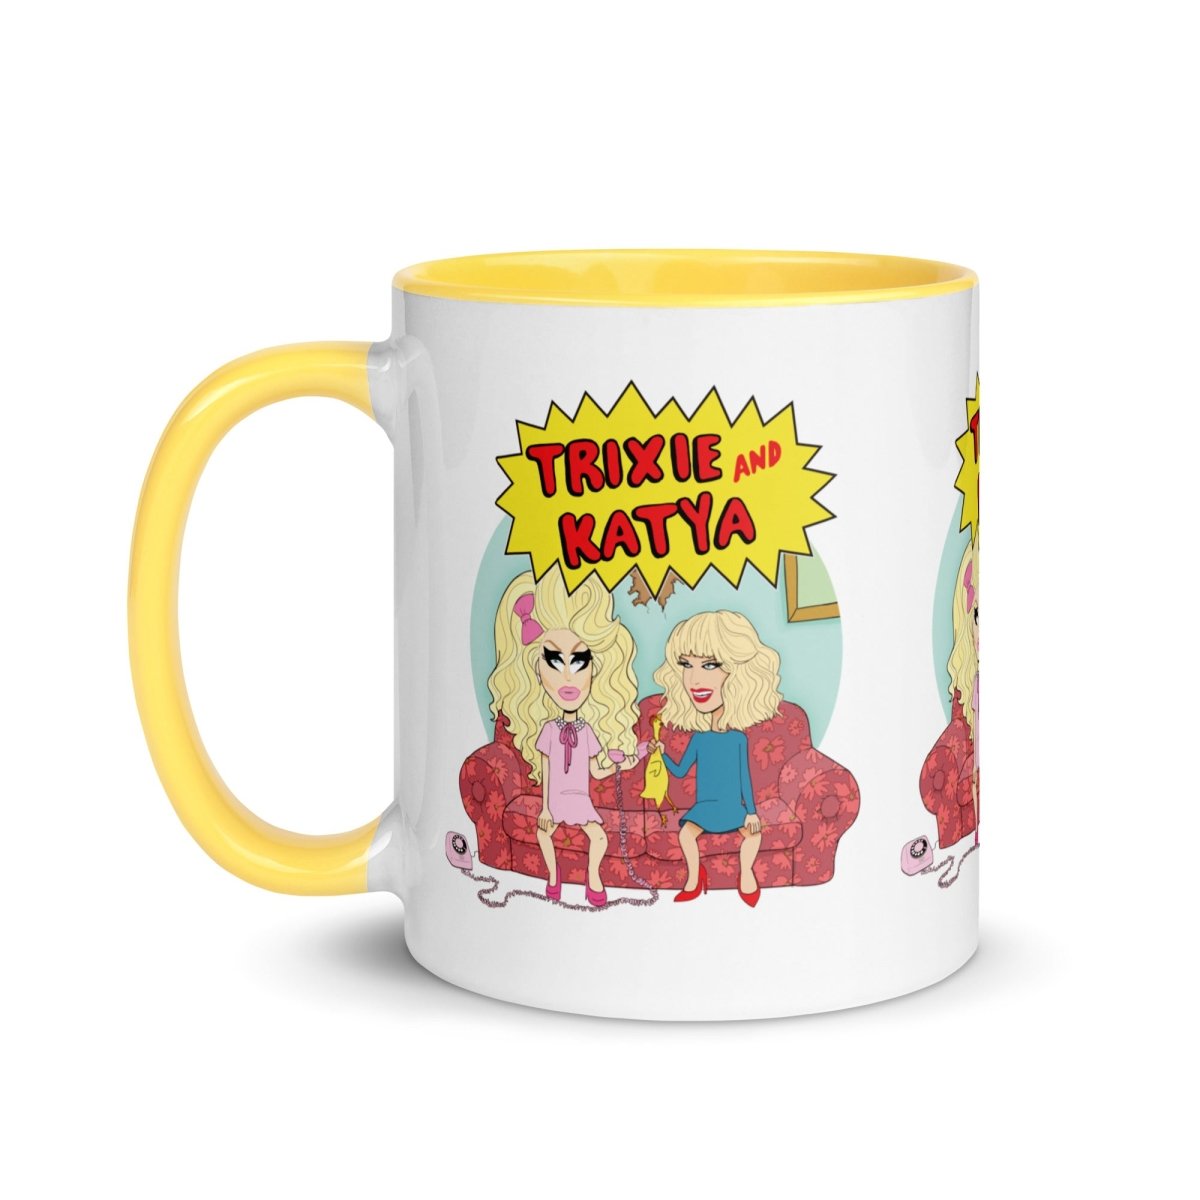 Trixie & Katya - Beavis & Butthead Mug - dragqueenmerch